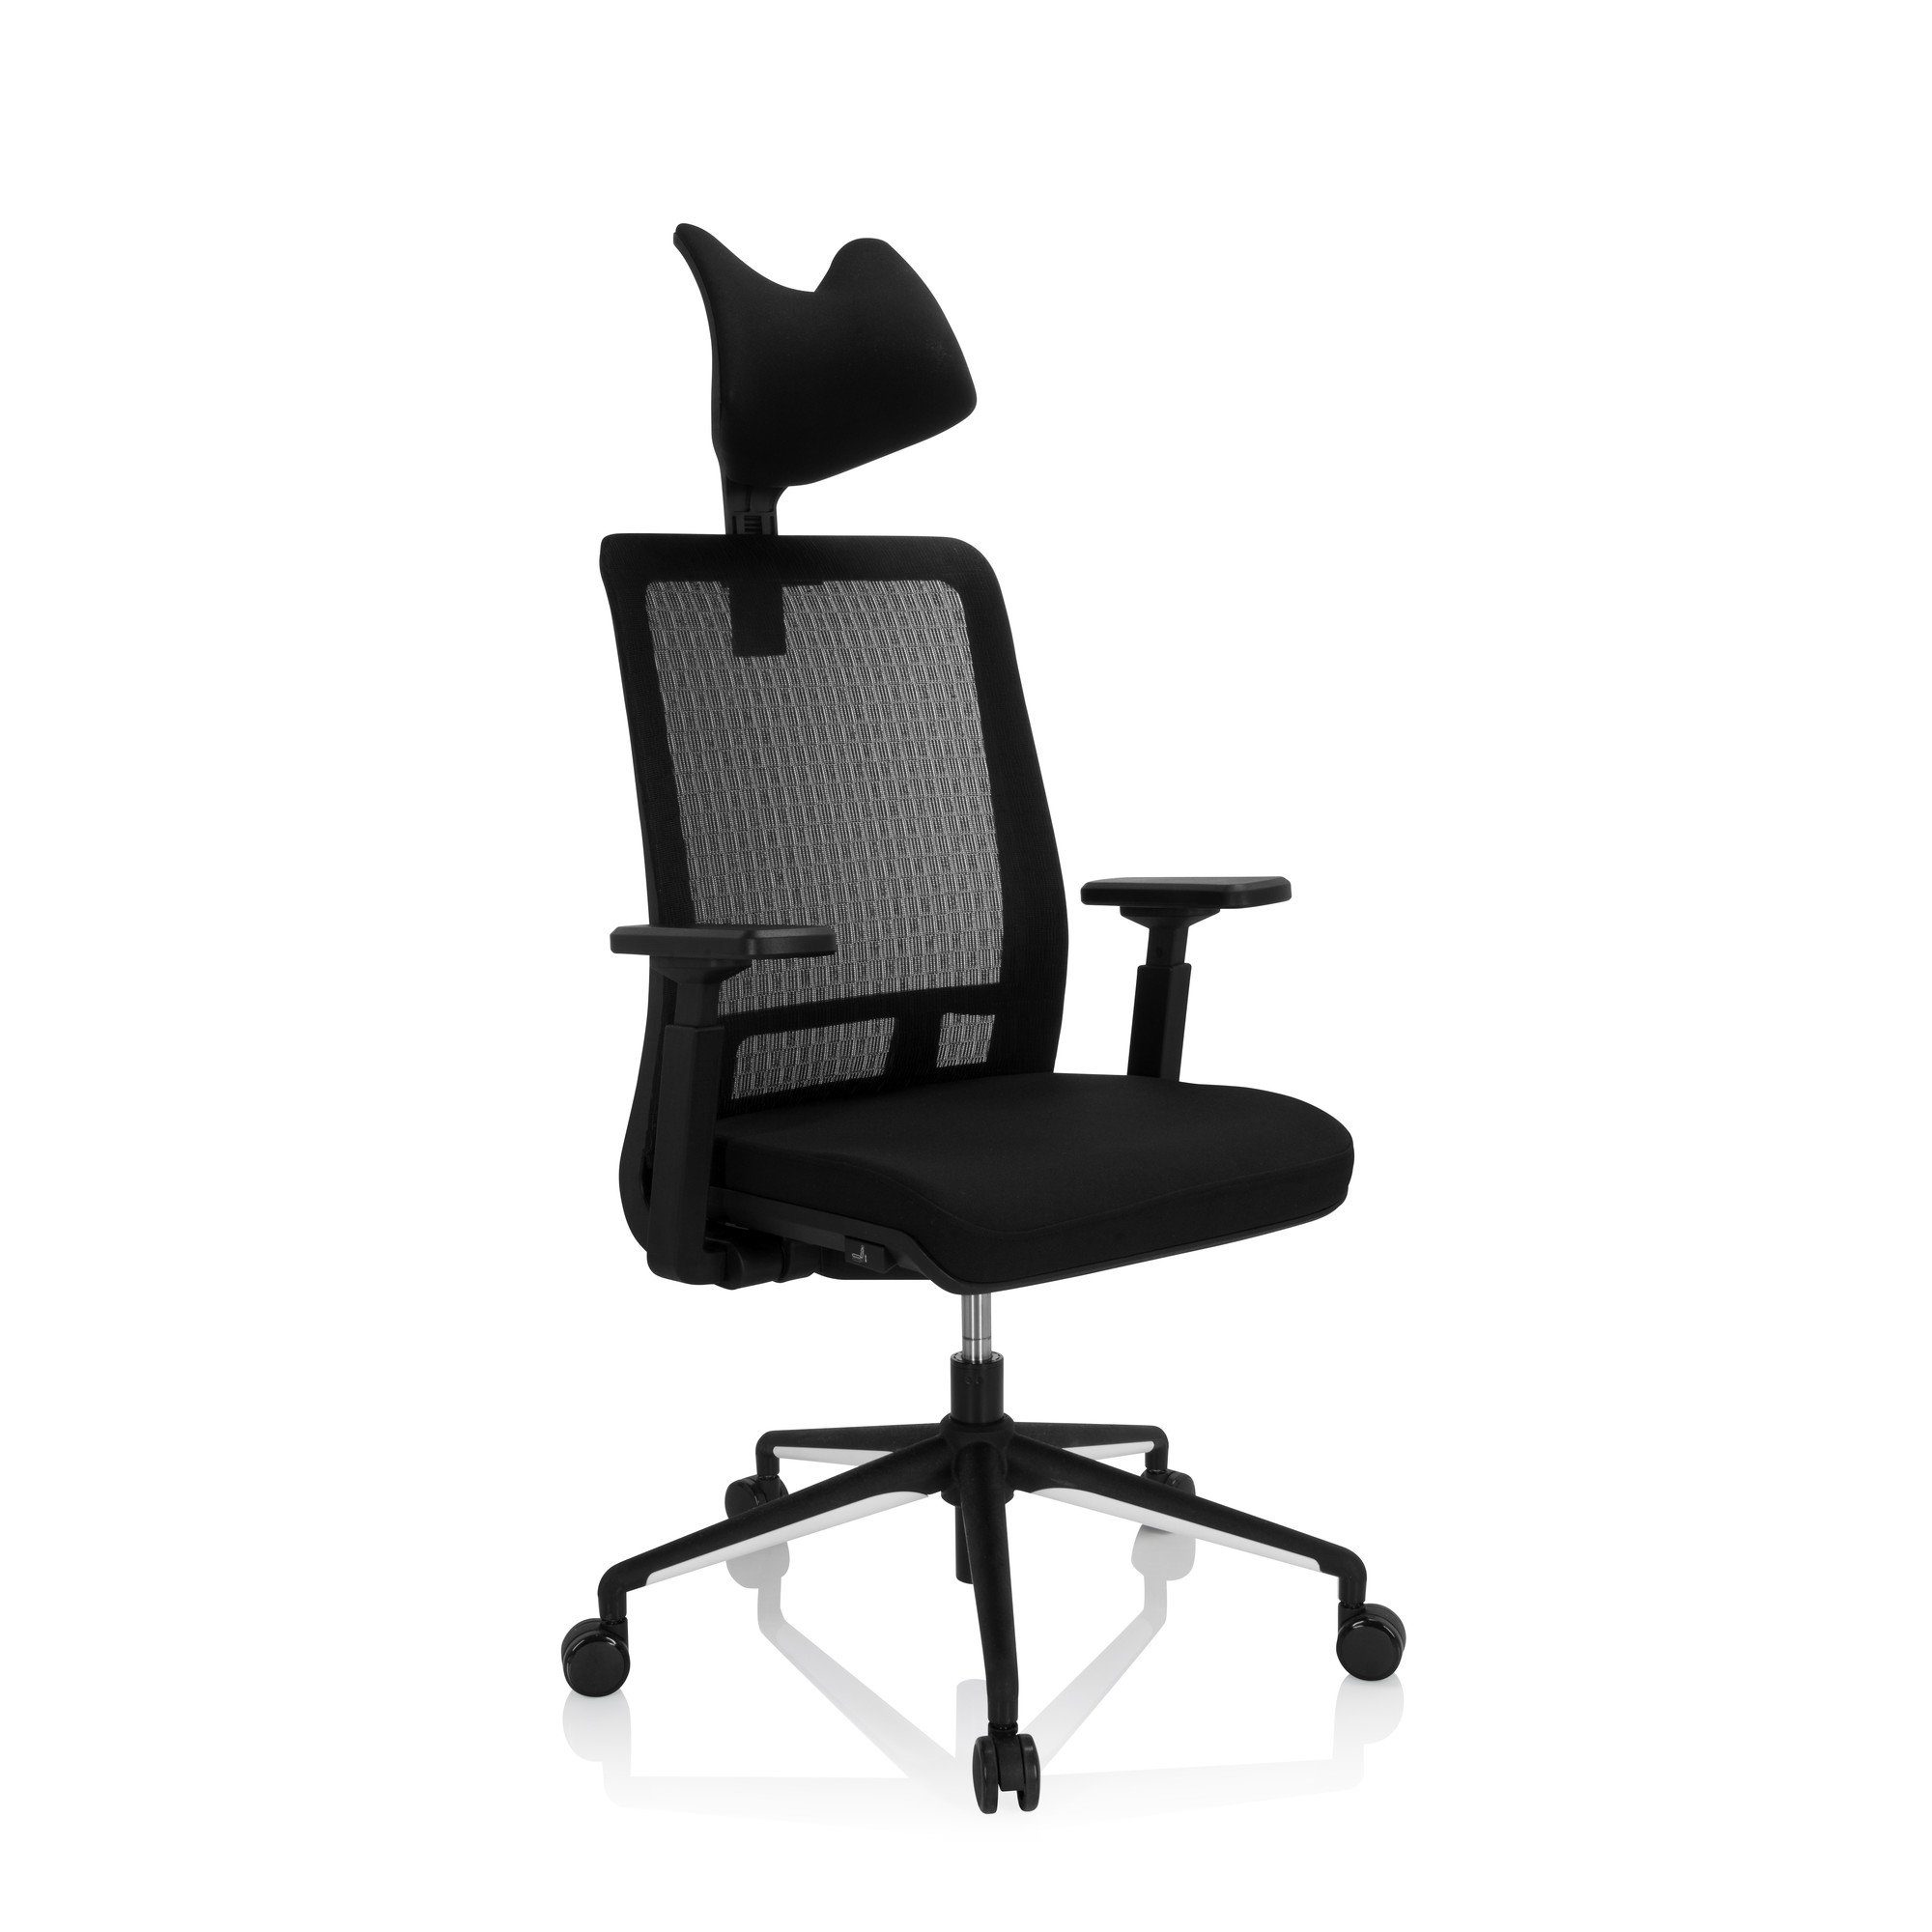 (1 OFFICE Drehstuhl MA St), Profi Bürostuhl hjh SKATE Stoff/Netzstoff Schreibtischstuhl ergonomisch